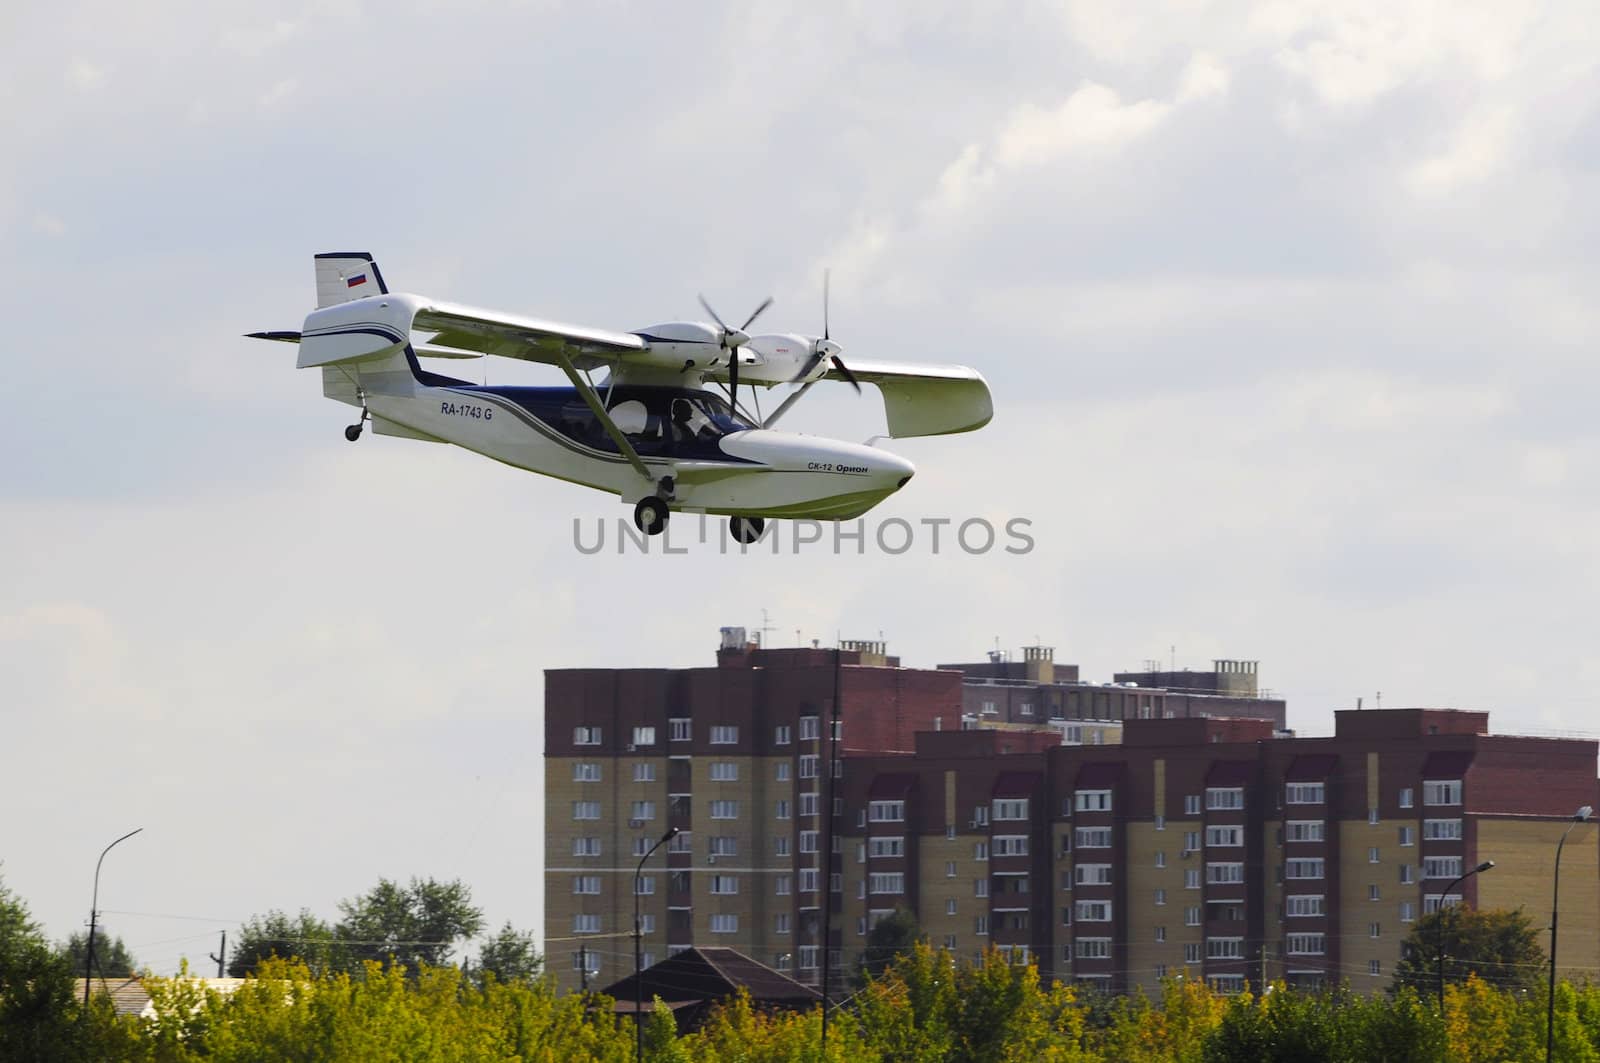 Air show "On a visit at Utair". Tyumen, Russia. 16.08.2014. Orio by veronka72